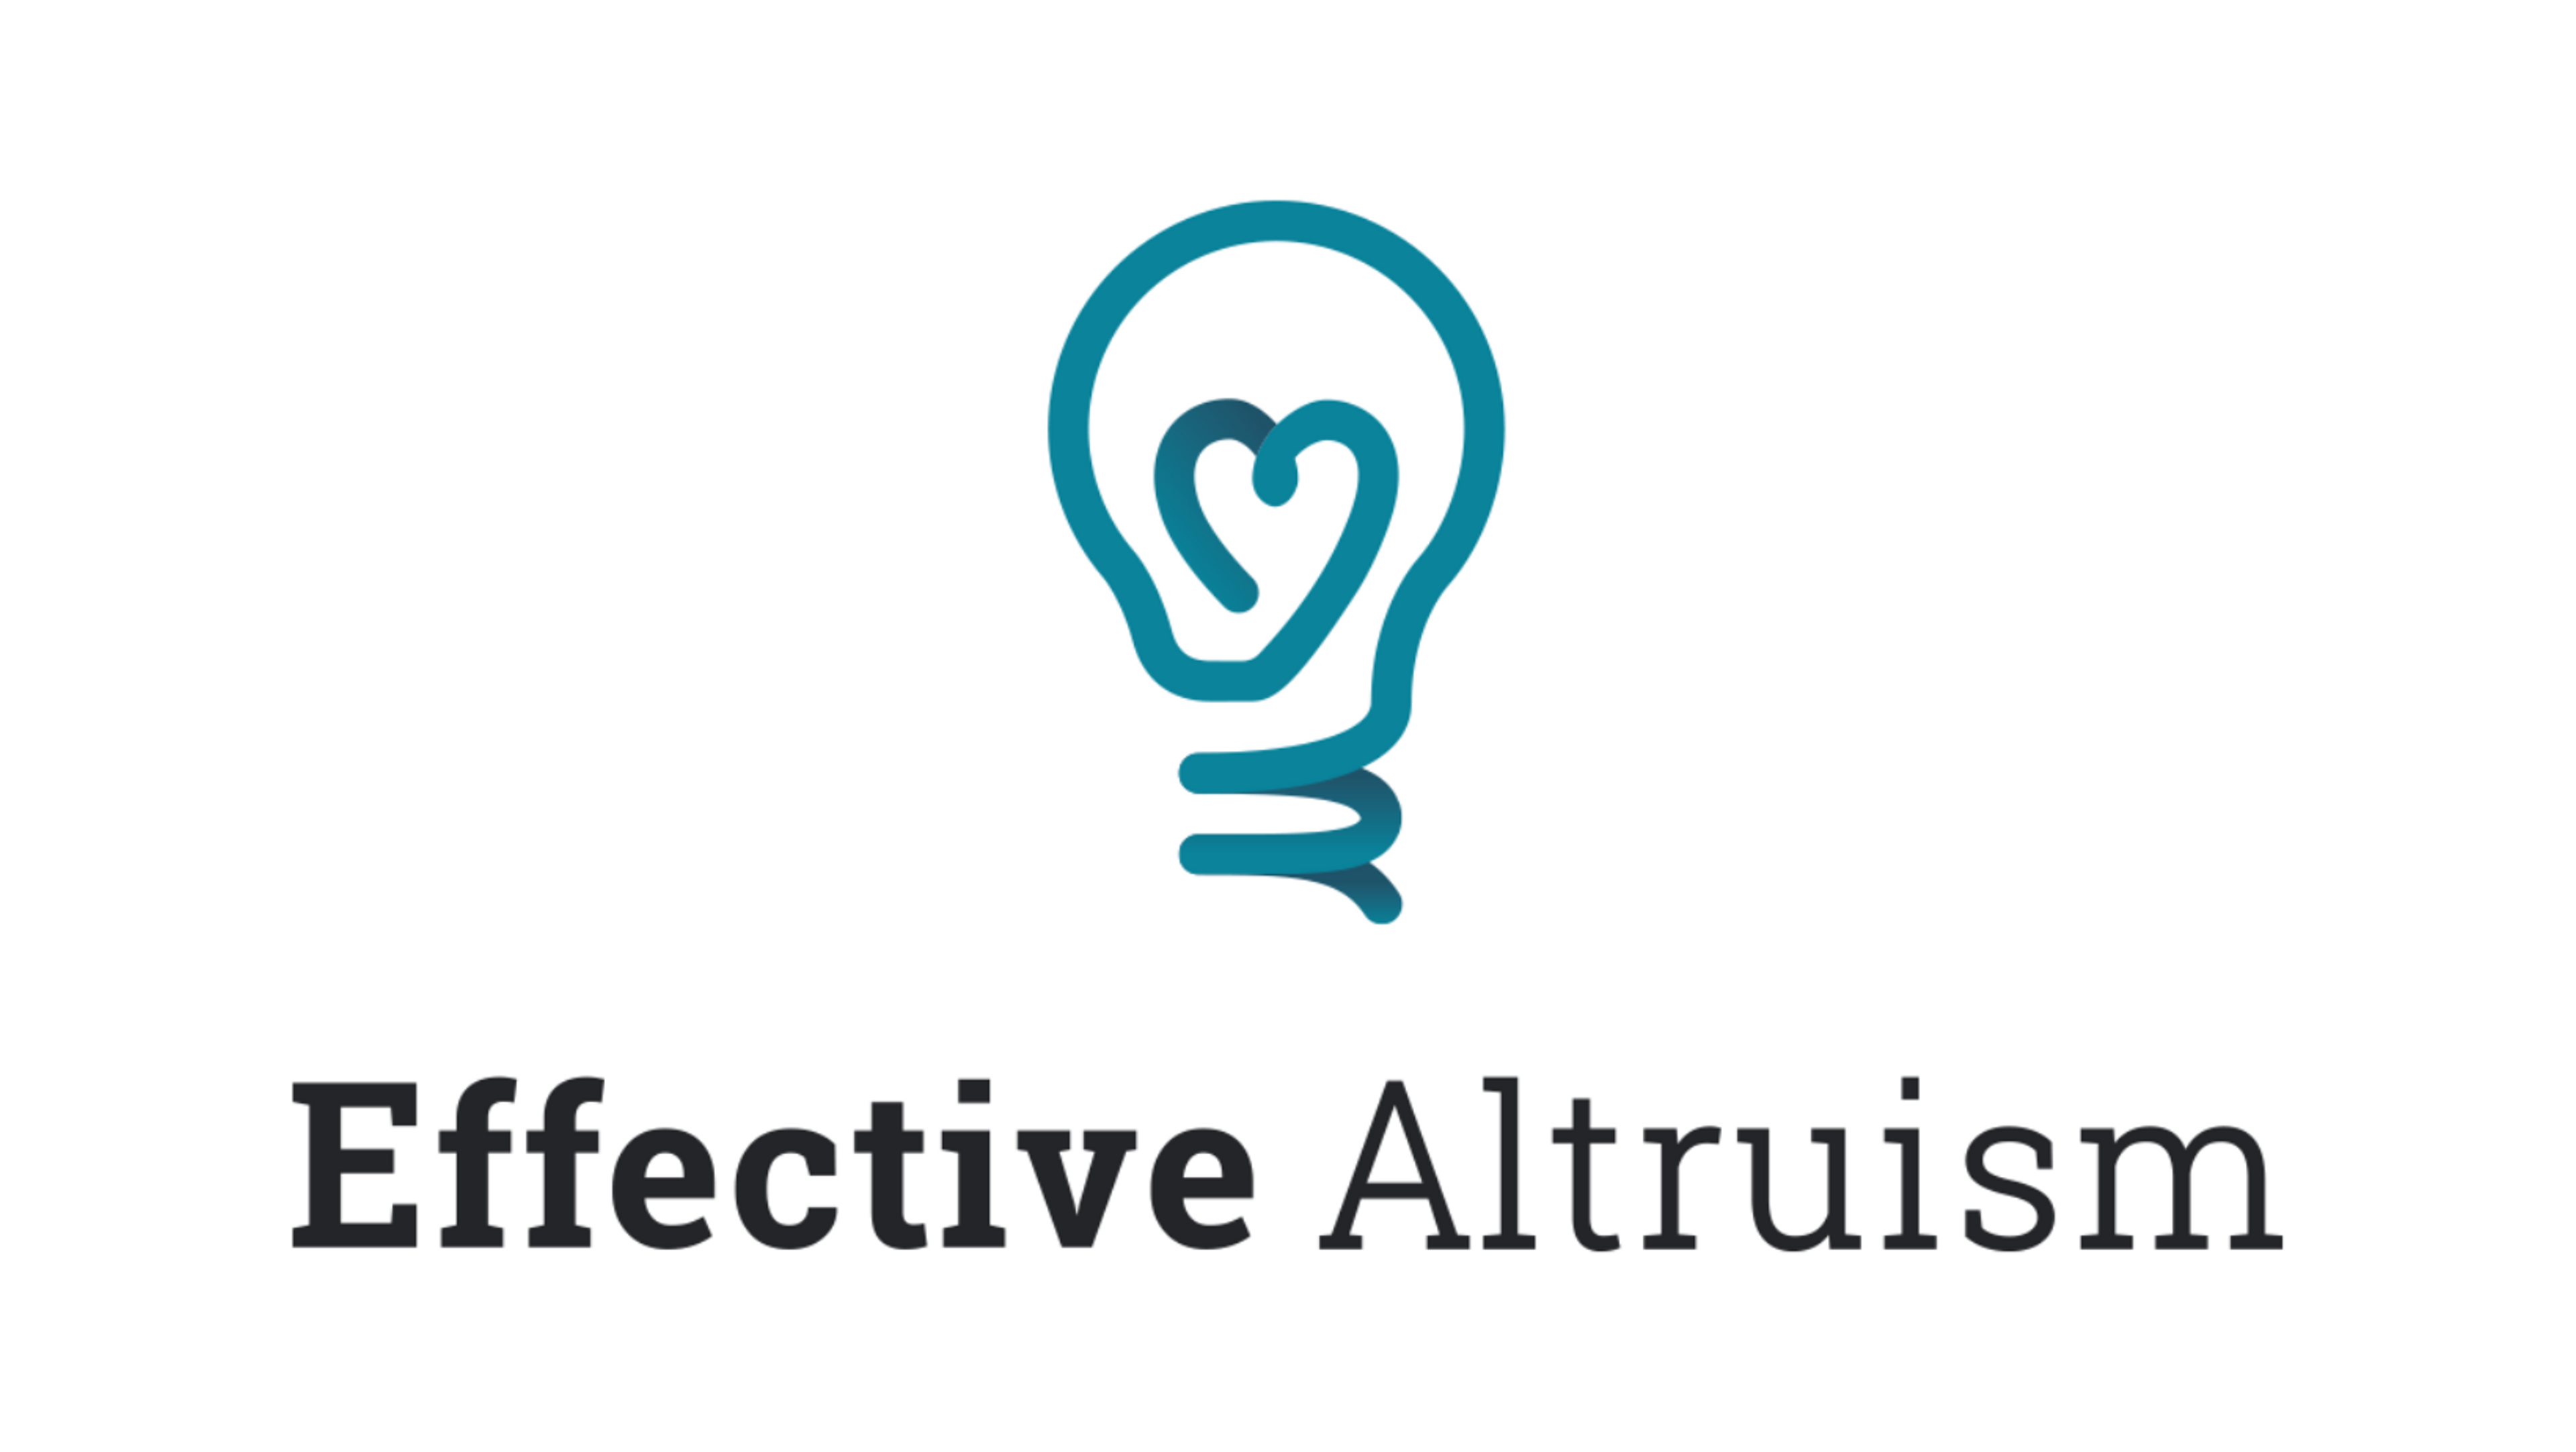 Advanced Altruism - Norman's effective leaving fundraiser